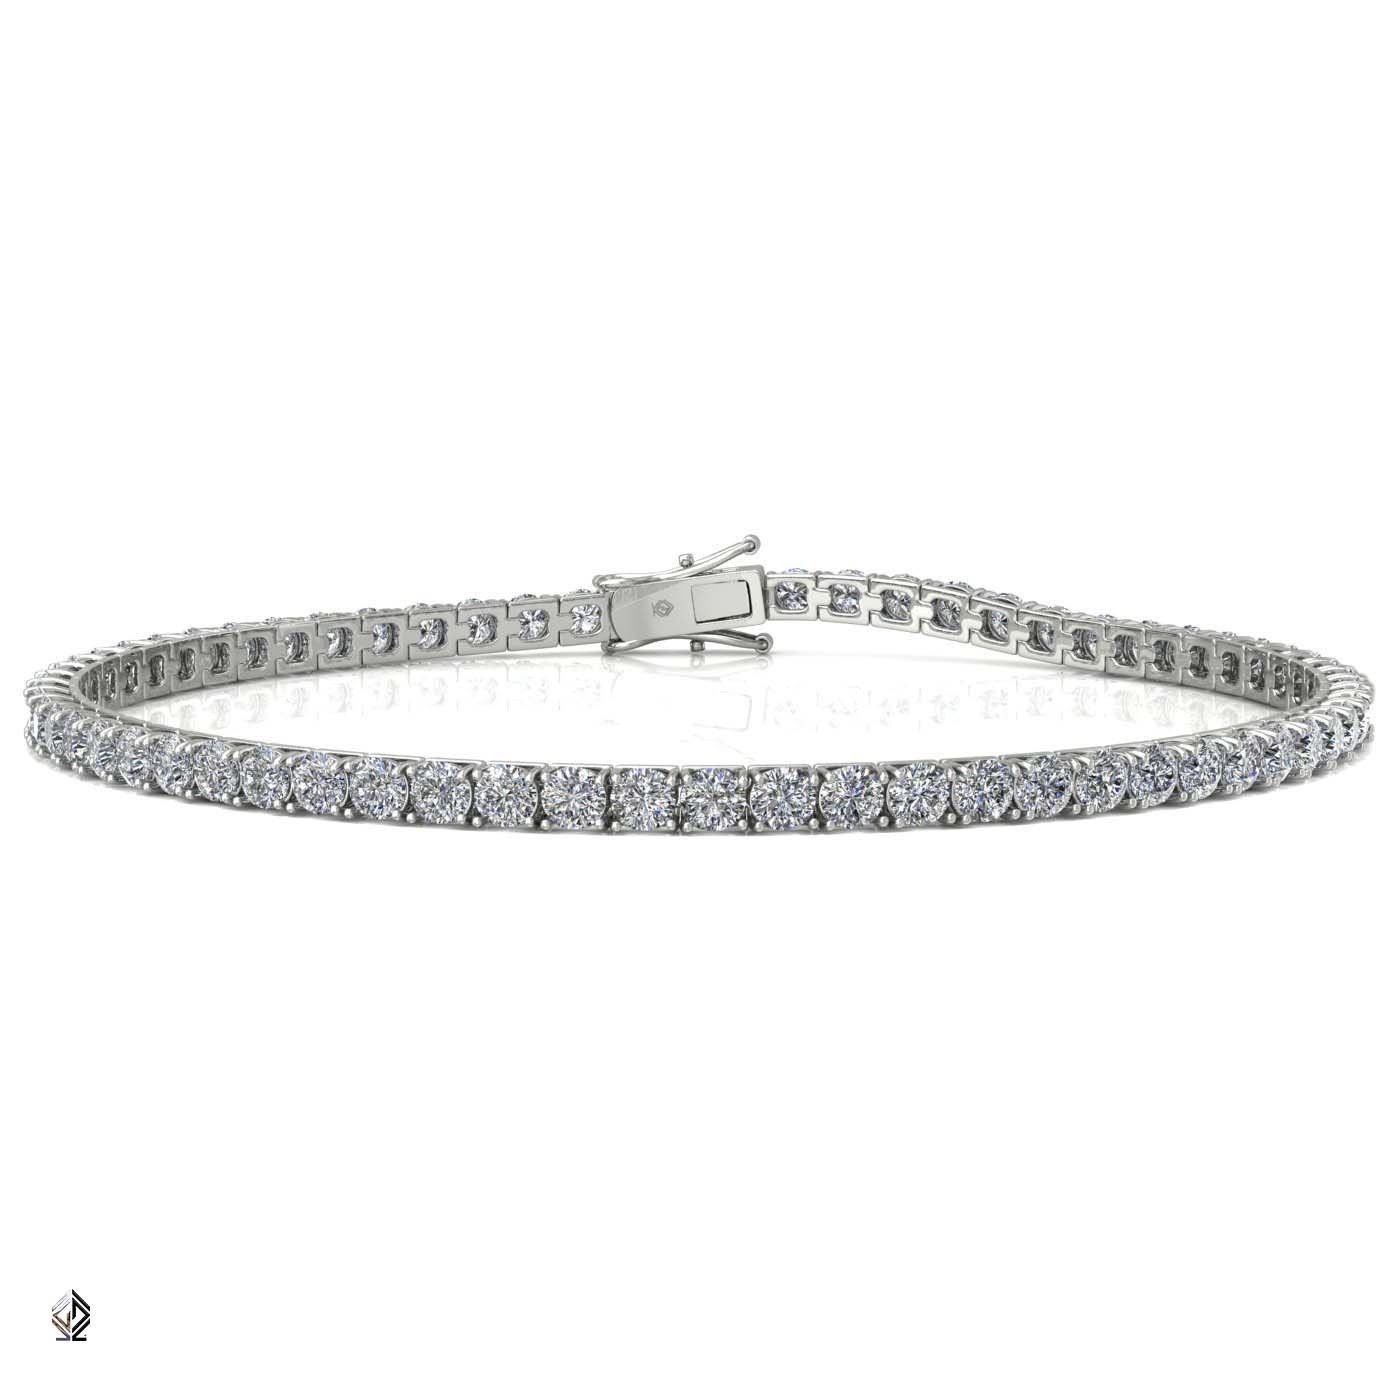 18k white gold 2.0mm 4 prong round shape diamond tennis bracelet in square setting